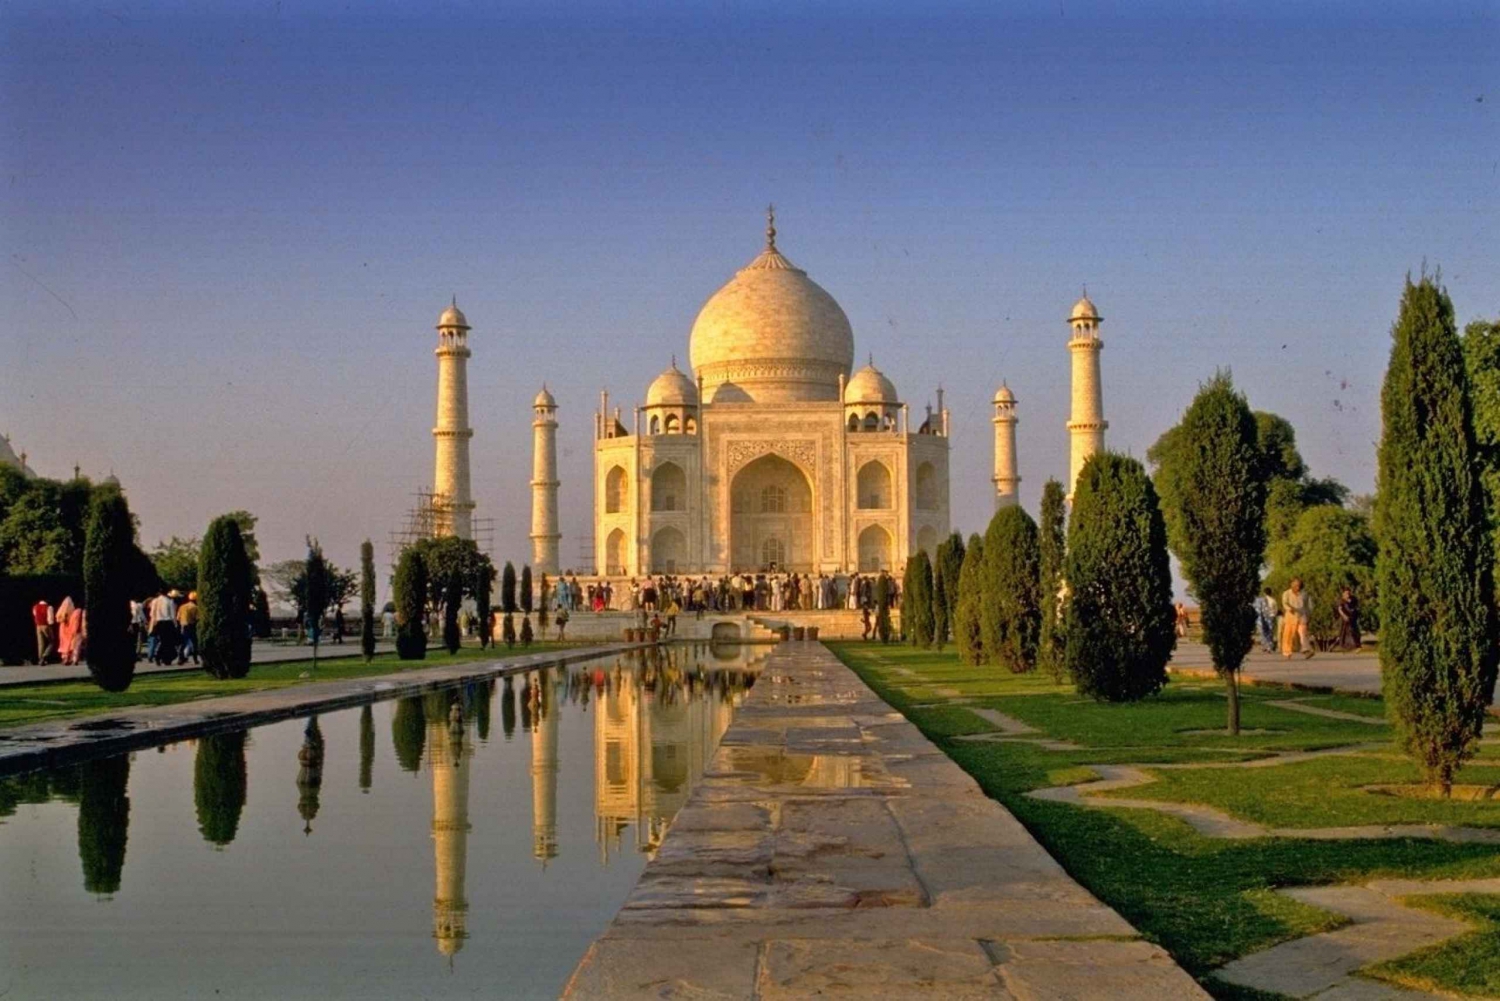 The Golden Triangle - Delhi, Agra and Jaipur 6 Days Tour